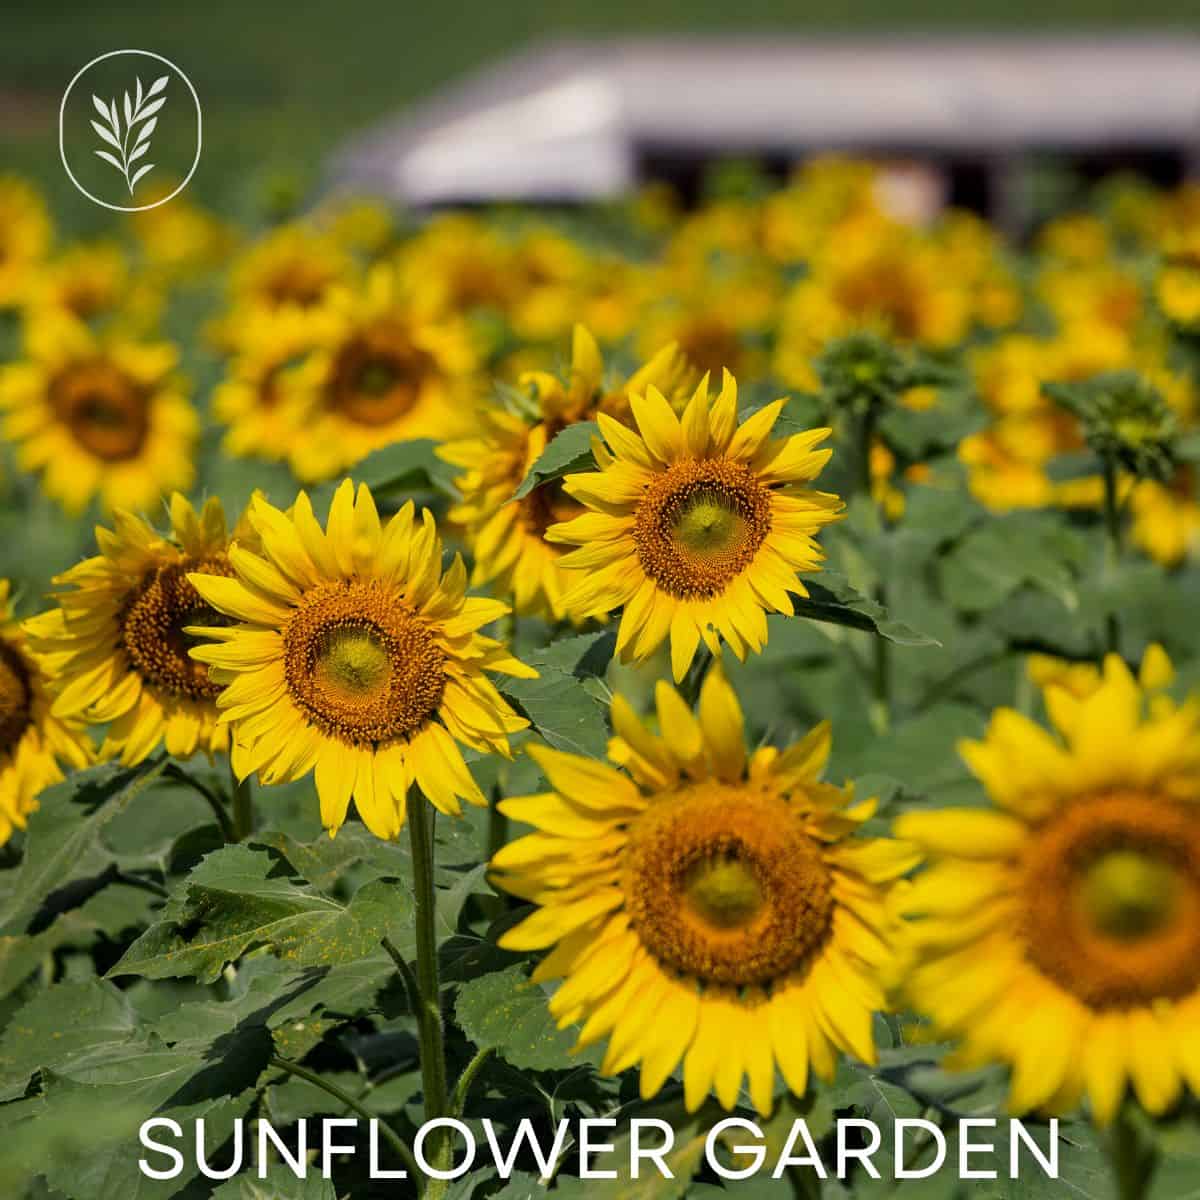 Sunflower garden ideas via @home4theharvest